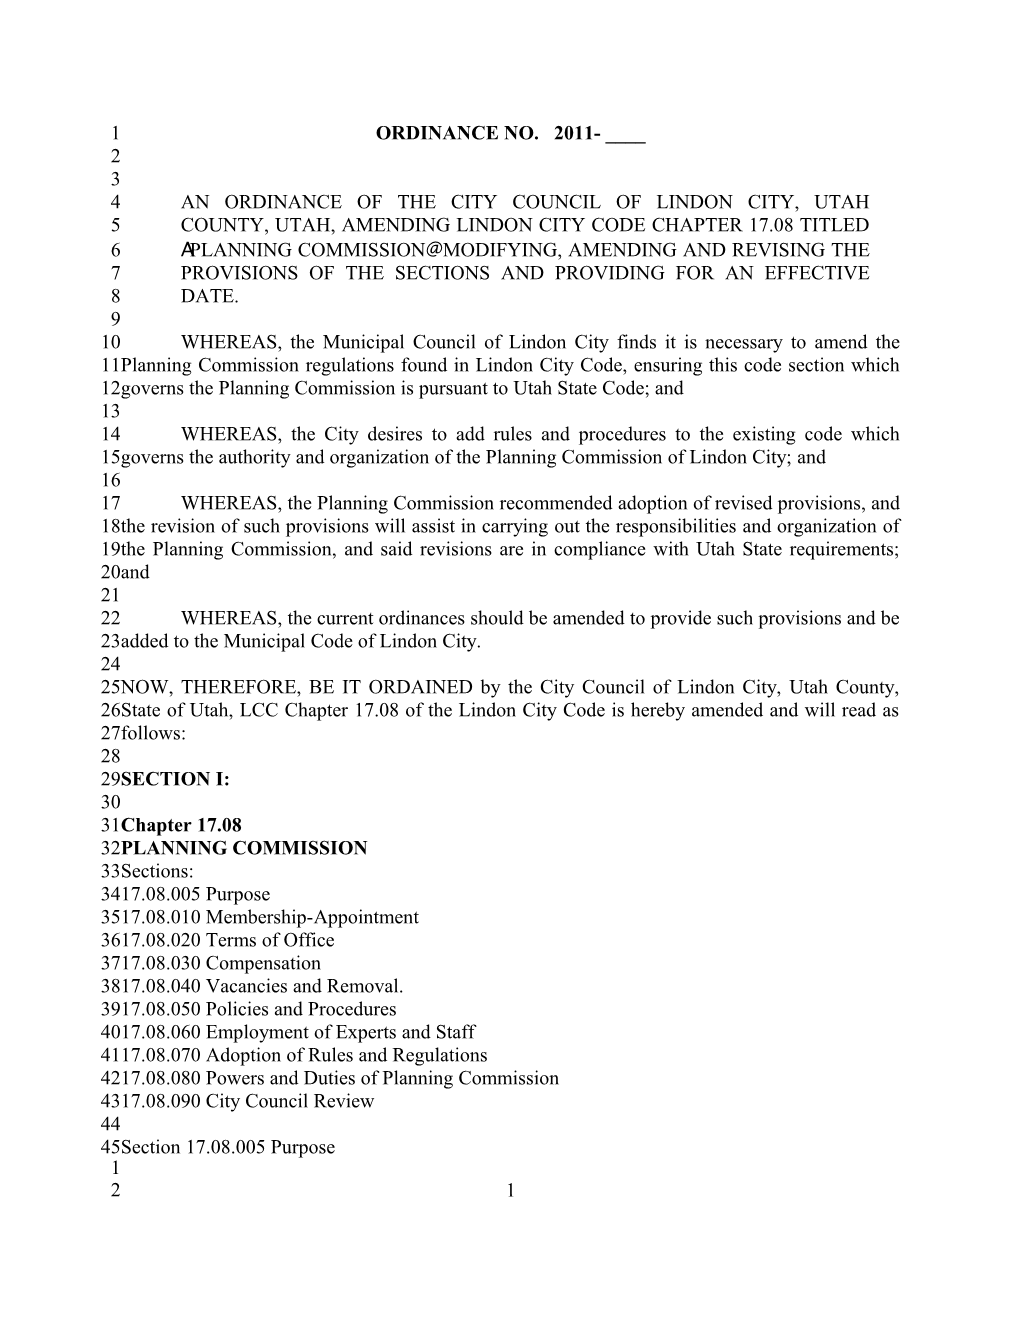 An Ordinance of the City Council of Lindon City, Utah County, Utah, Amending Lindon City